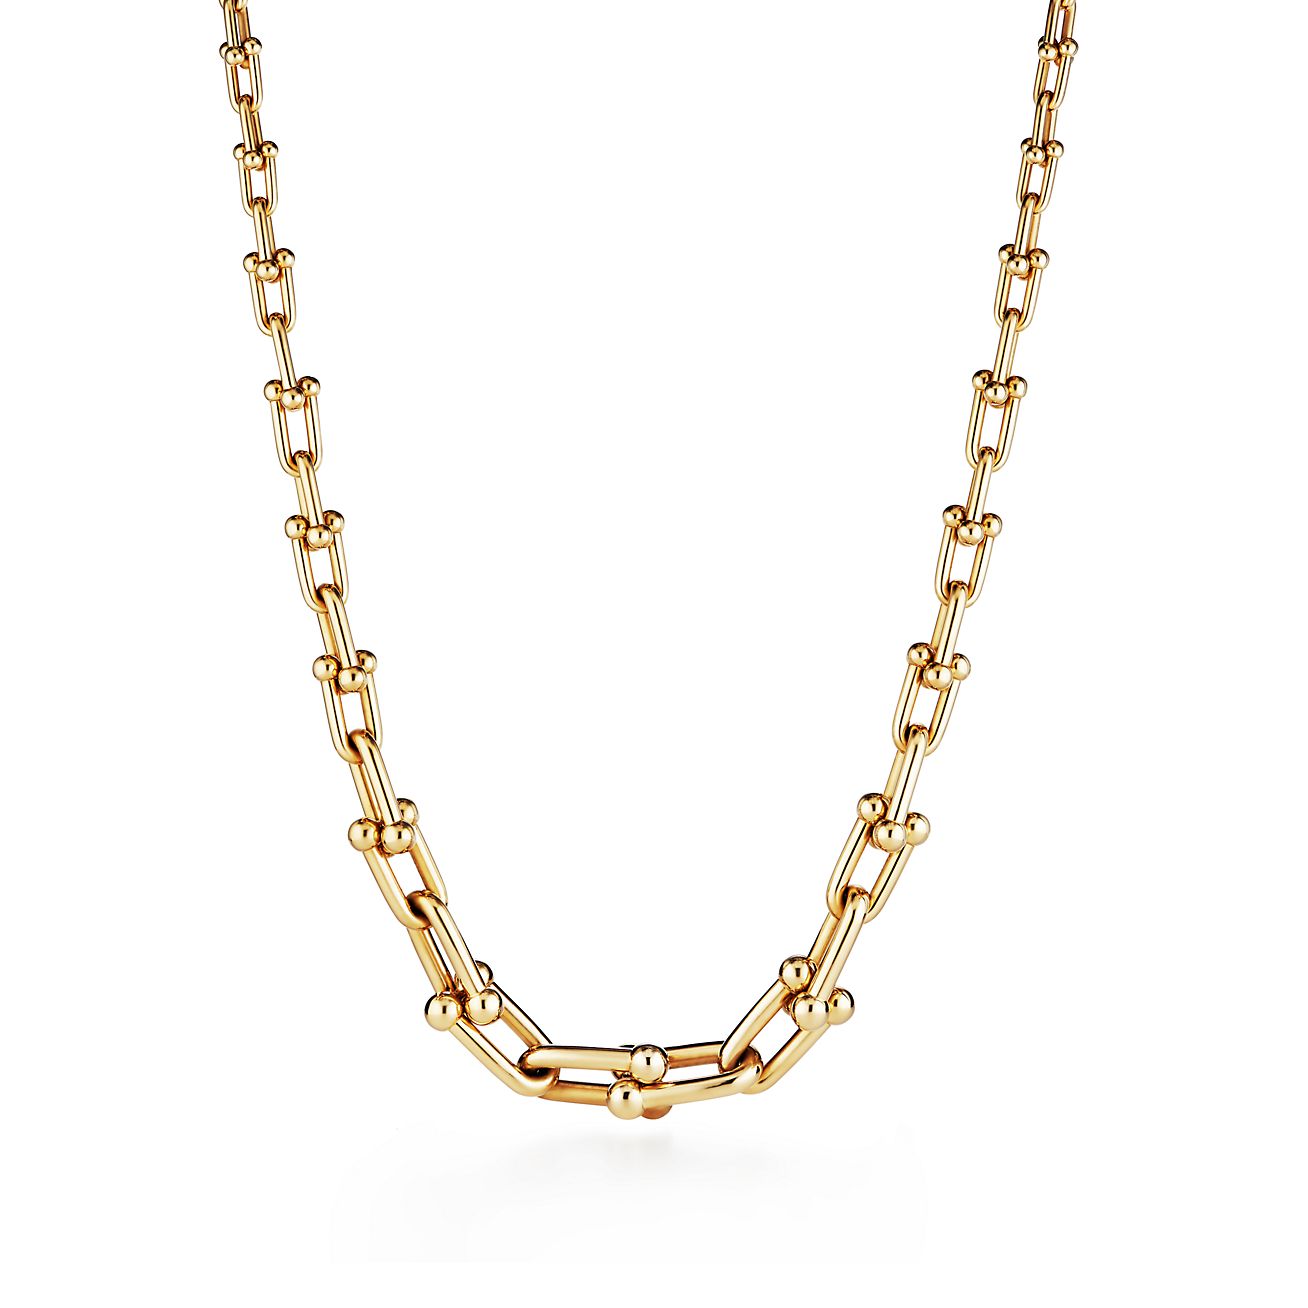 Tiffany HardWear graduated link necklace in 18k gold.